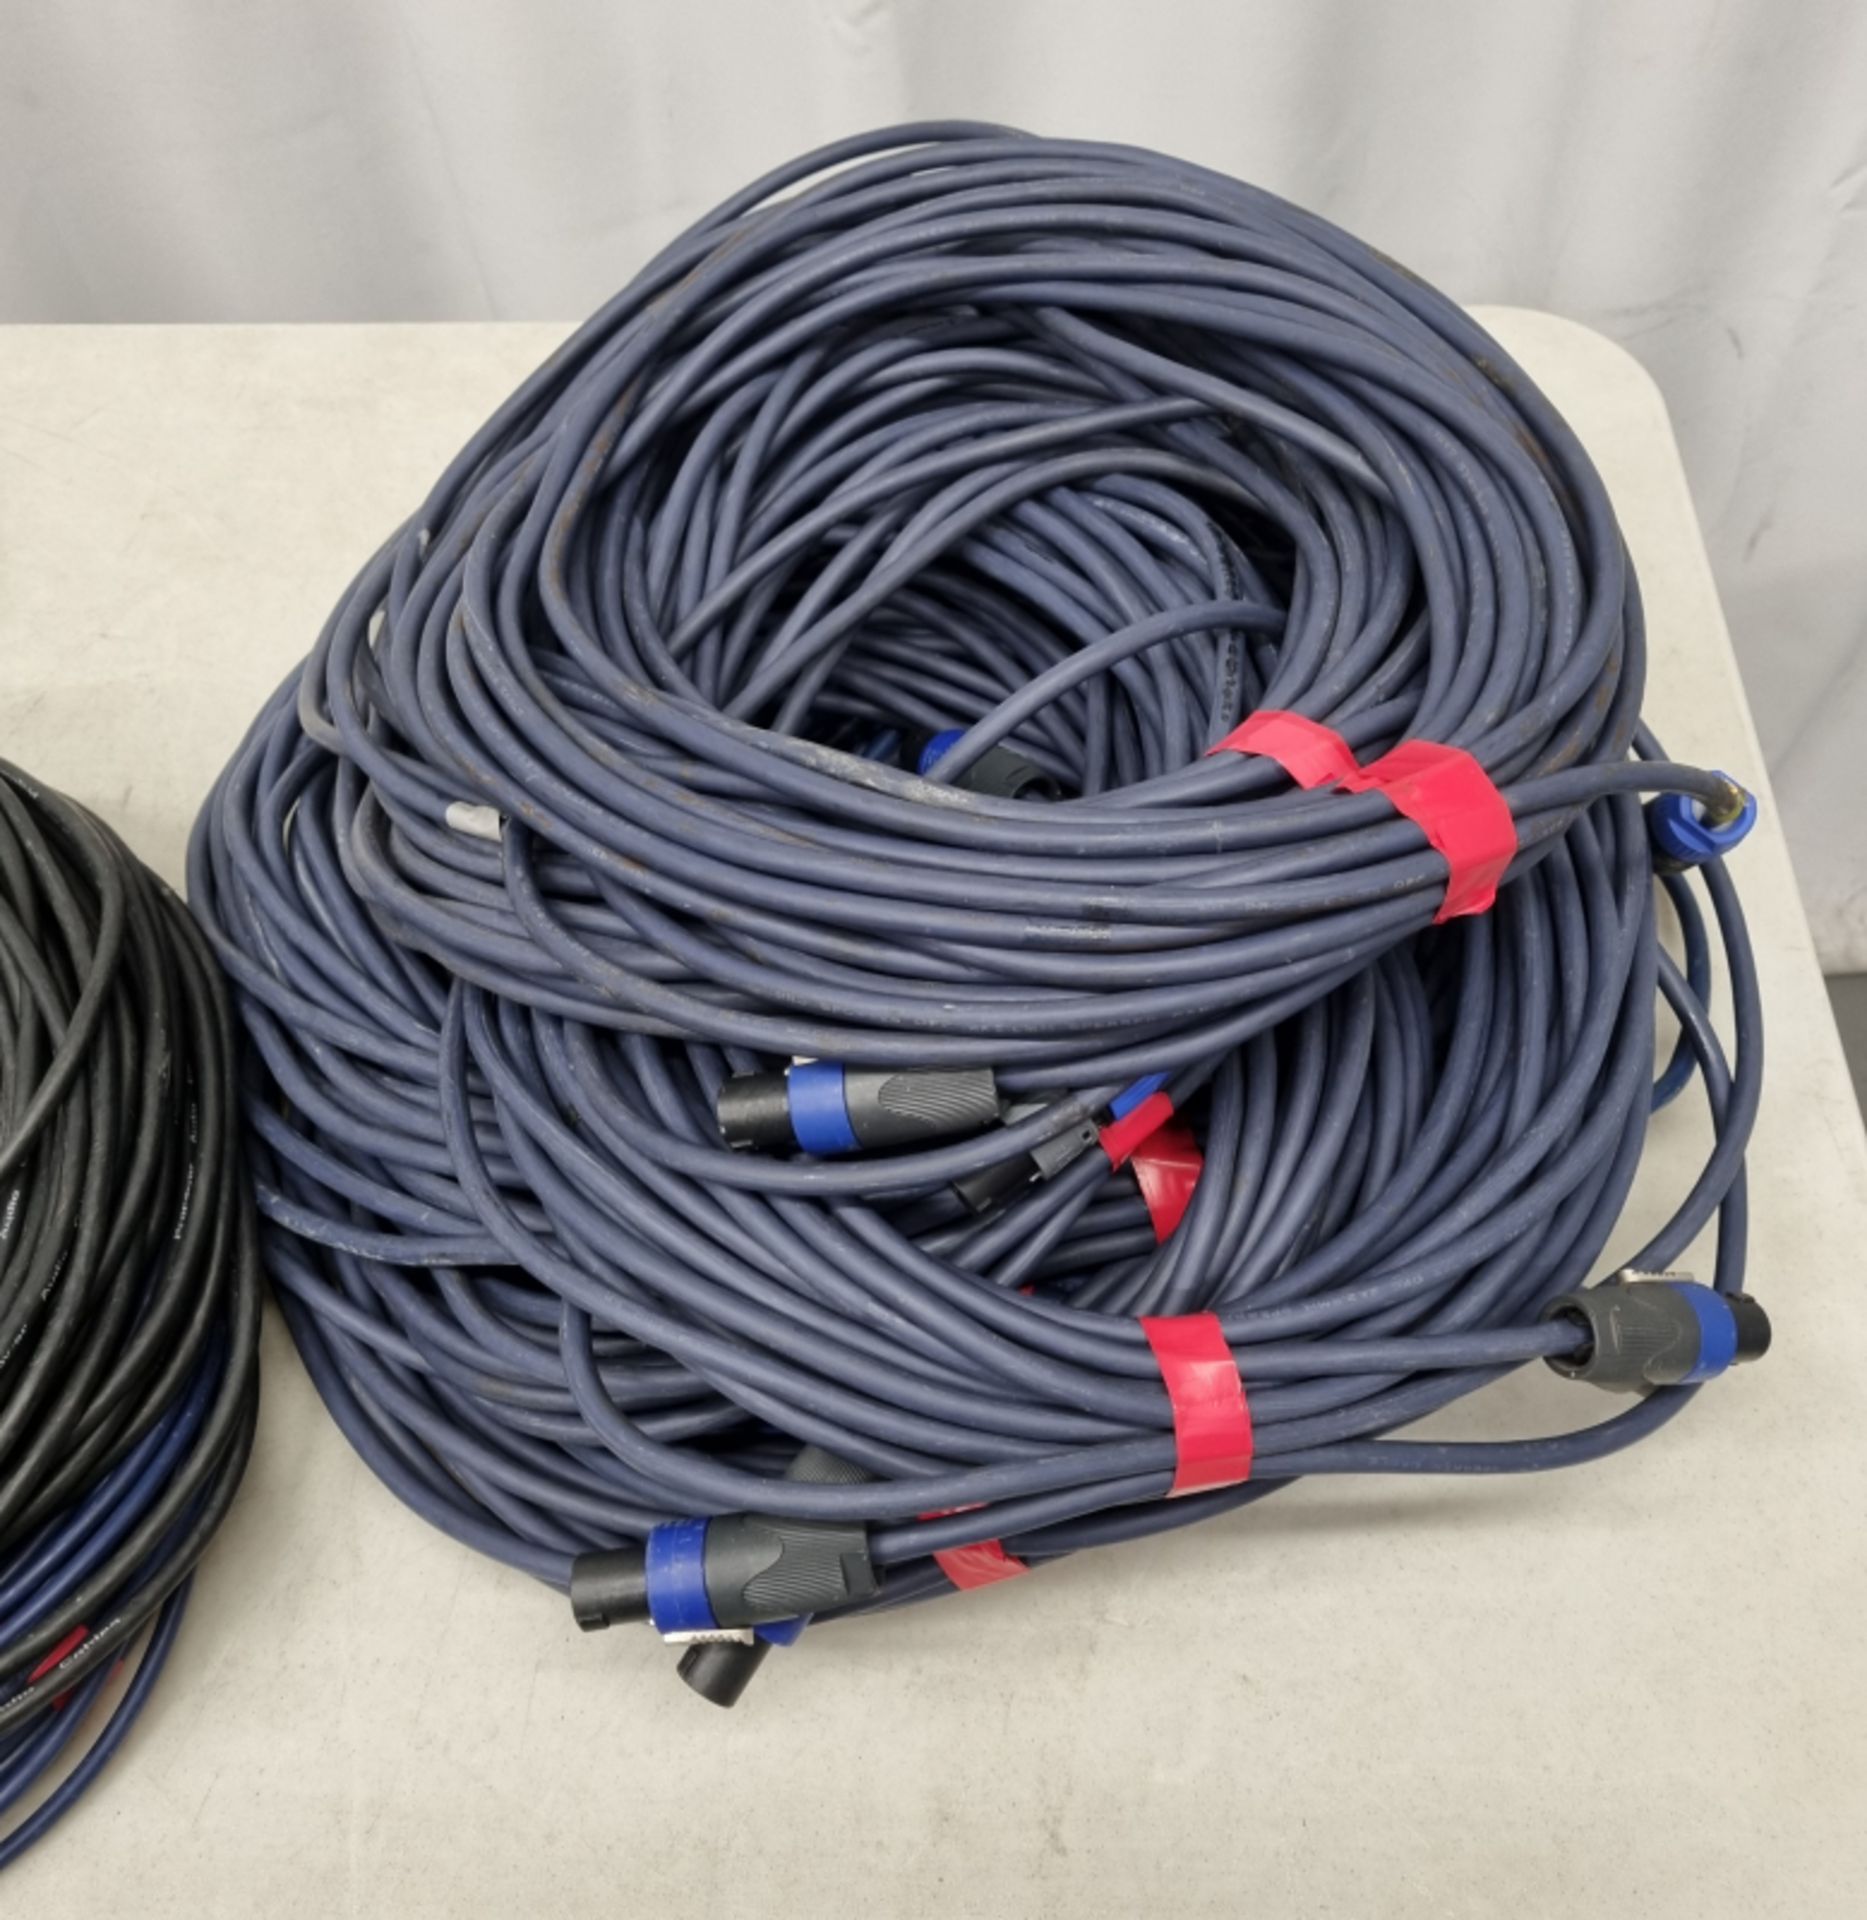 Speaker Cables - 12 X 20M / 14 X 10M / 2 X 30M - Image 5 of 8